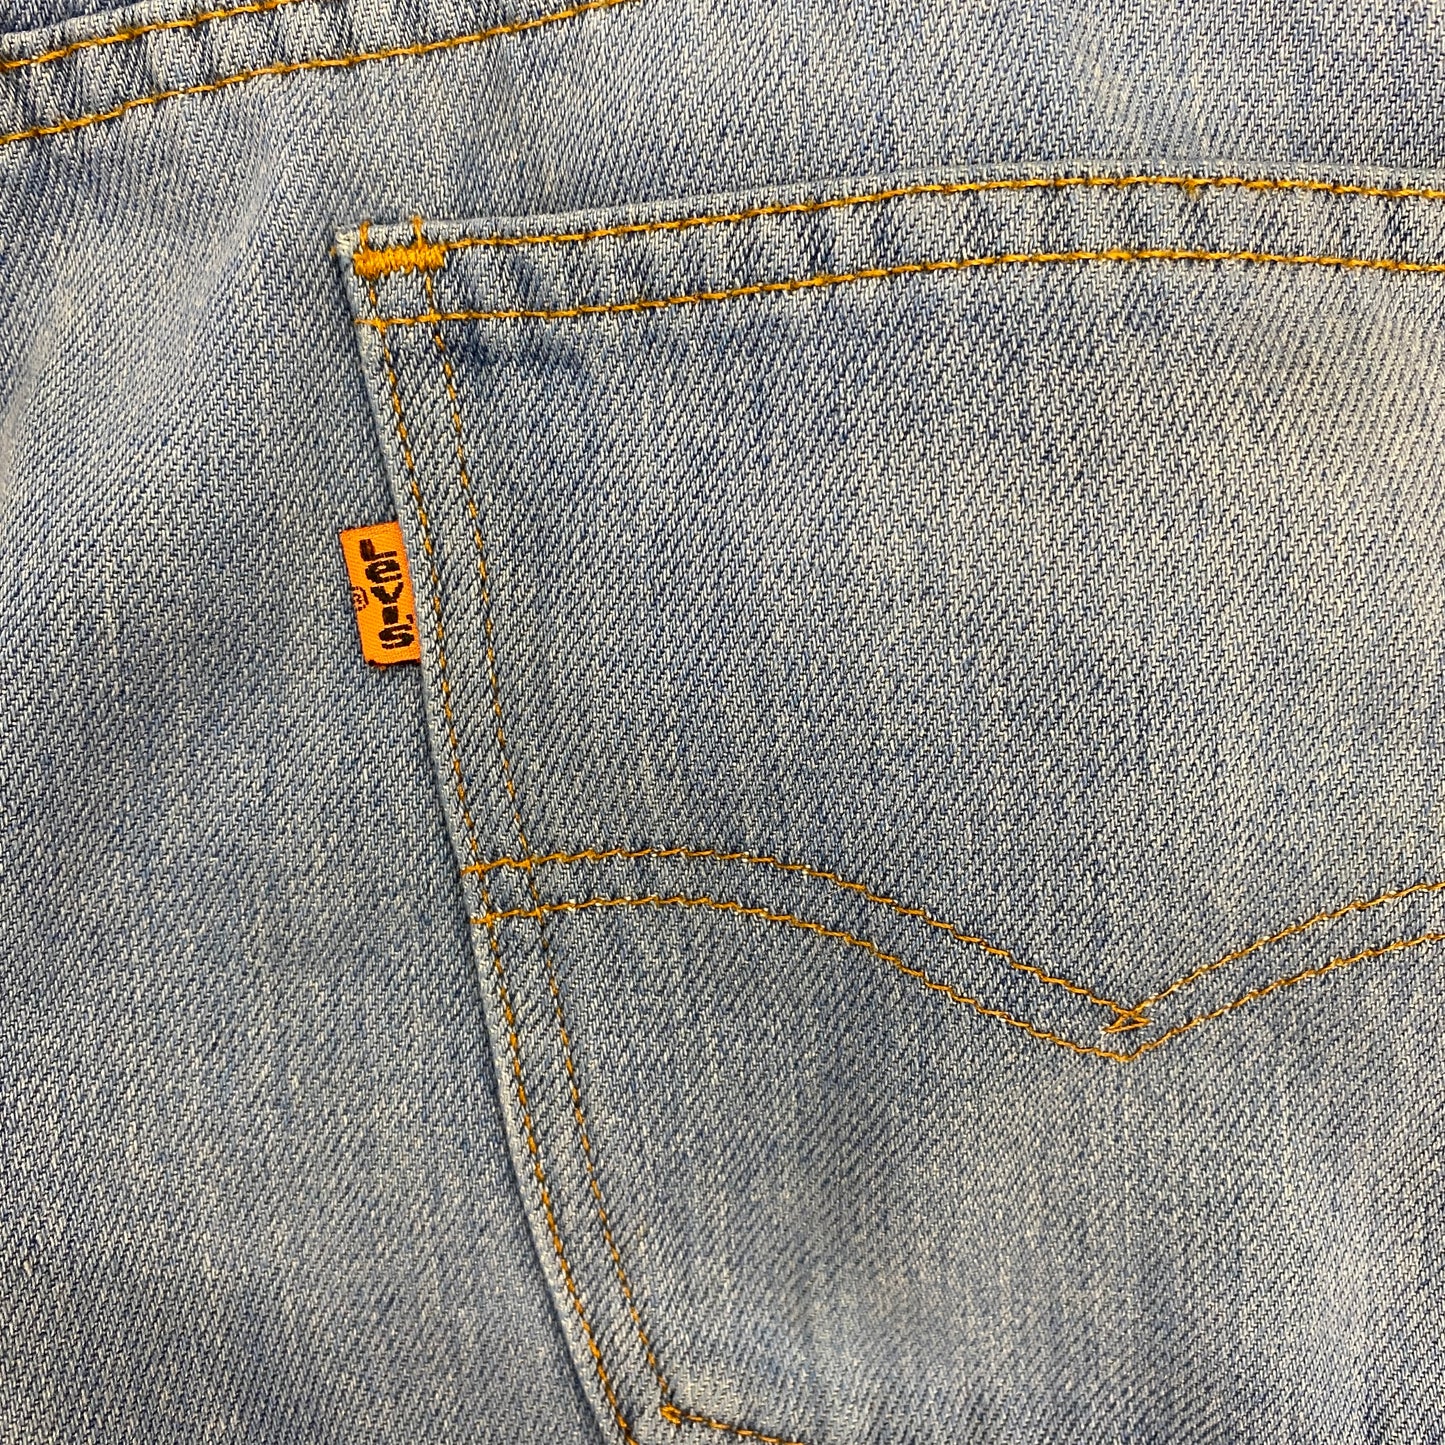 Vintage 1980s Levi's Orange Tab Jeans - 36"x27"